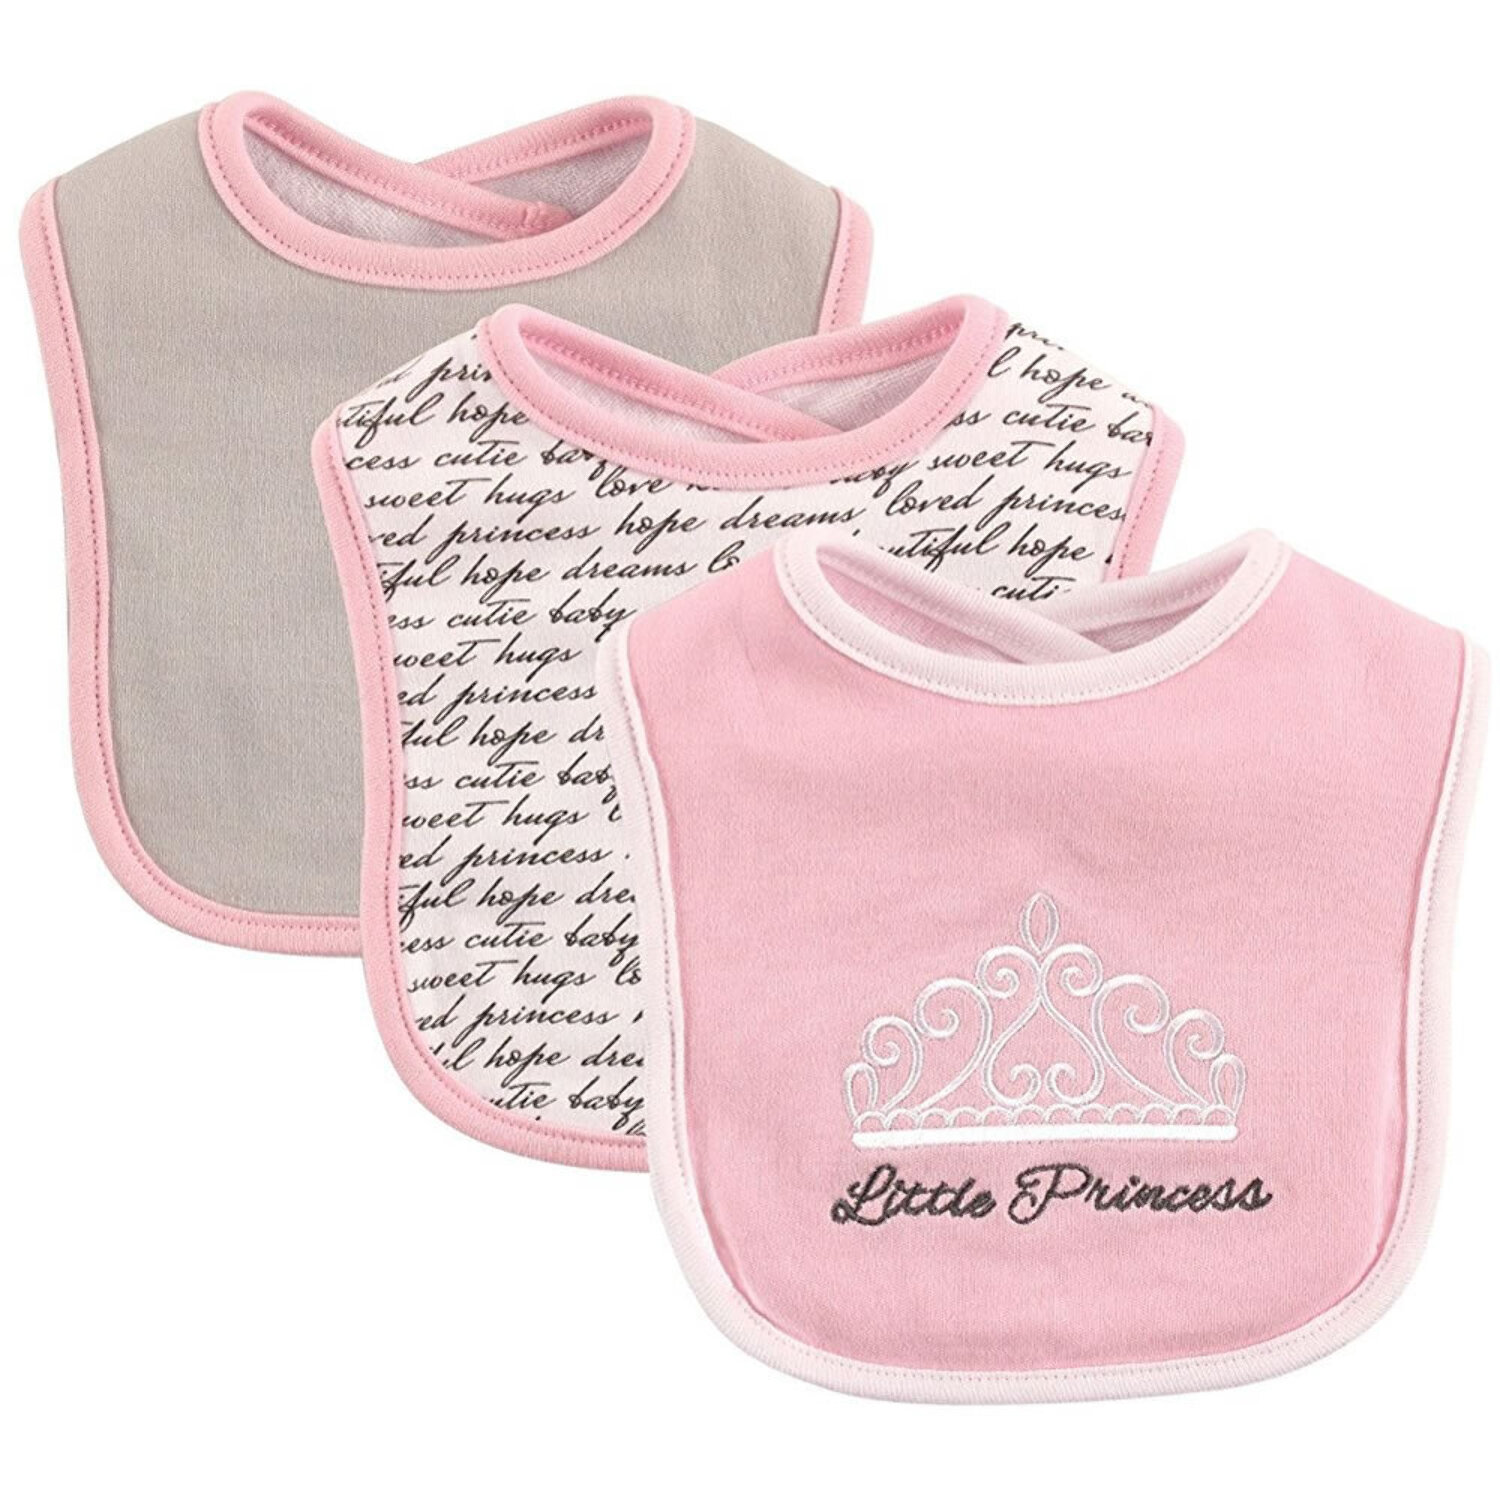 Hudson Baby Infant Girl Cotton Bib and Burp Cloth Set 6pk, Princess, One Size - image 3 of 3